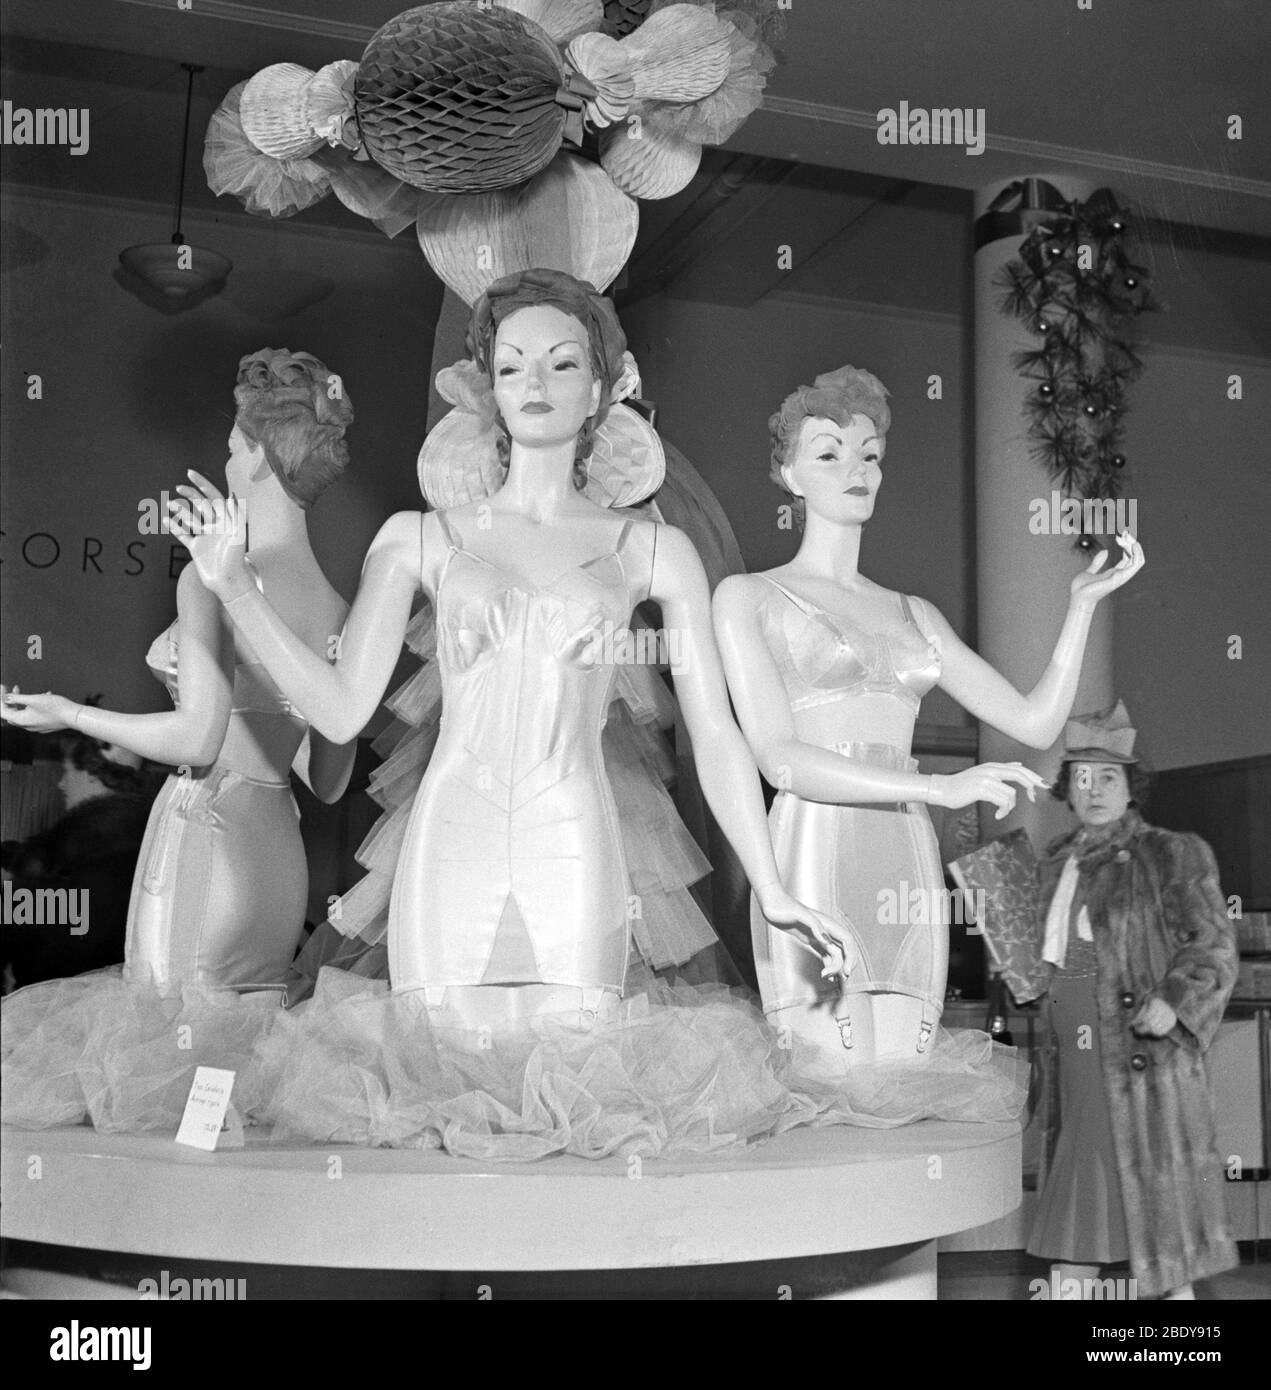 NYC, Macy's Christmas Corset Display, 1942 Stock Photo